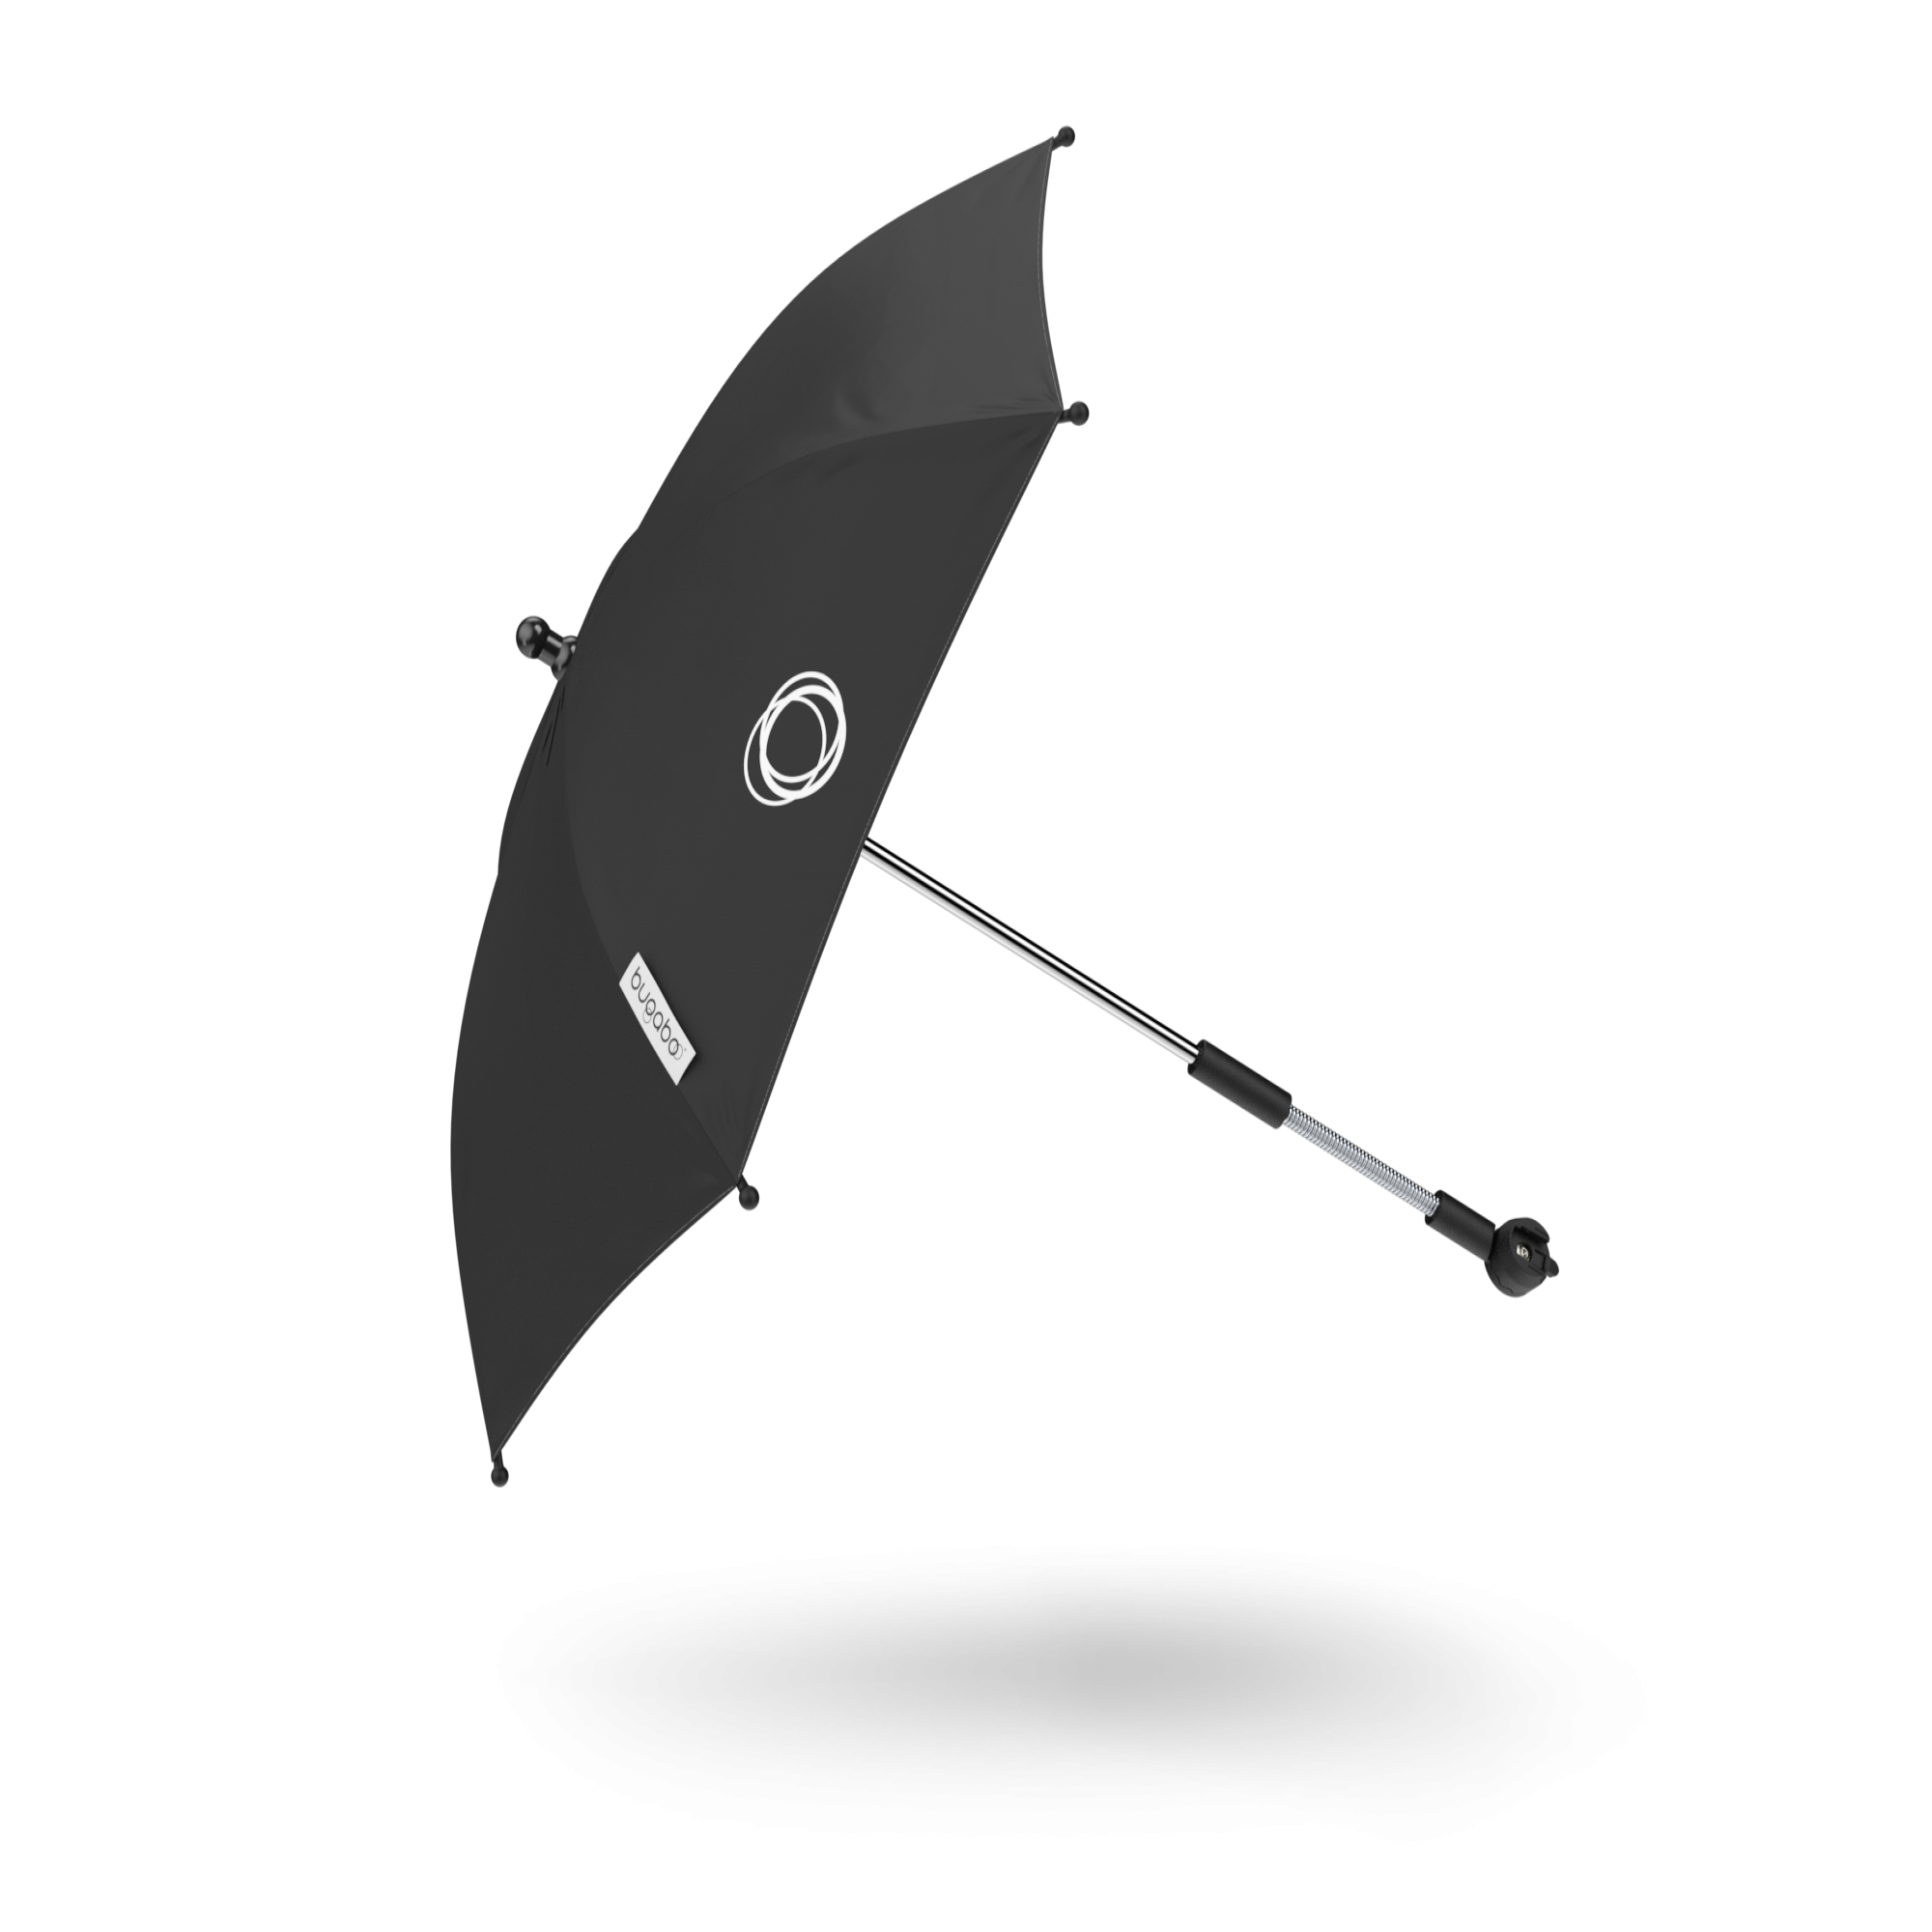 parasol bugaboo fox